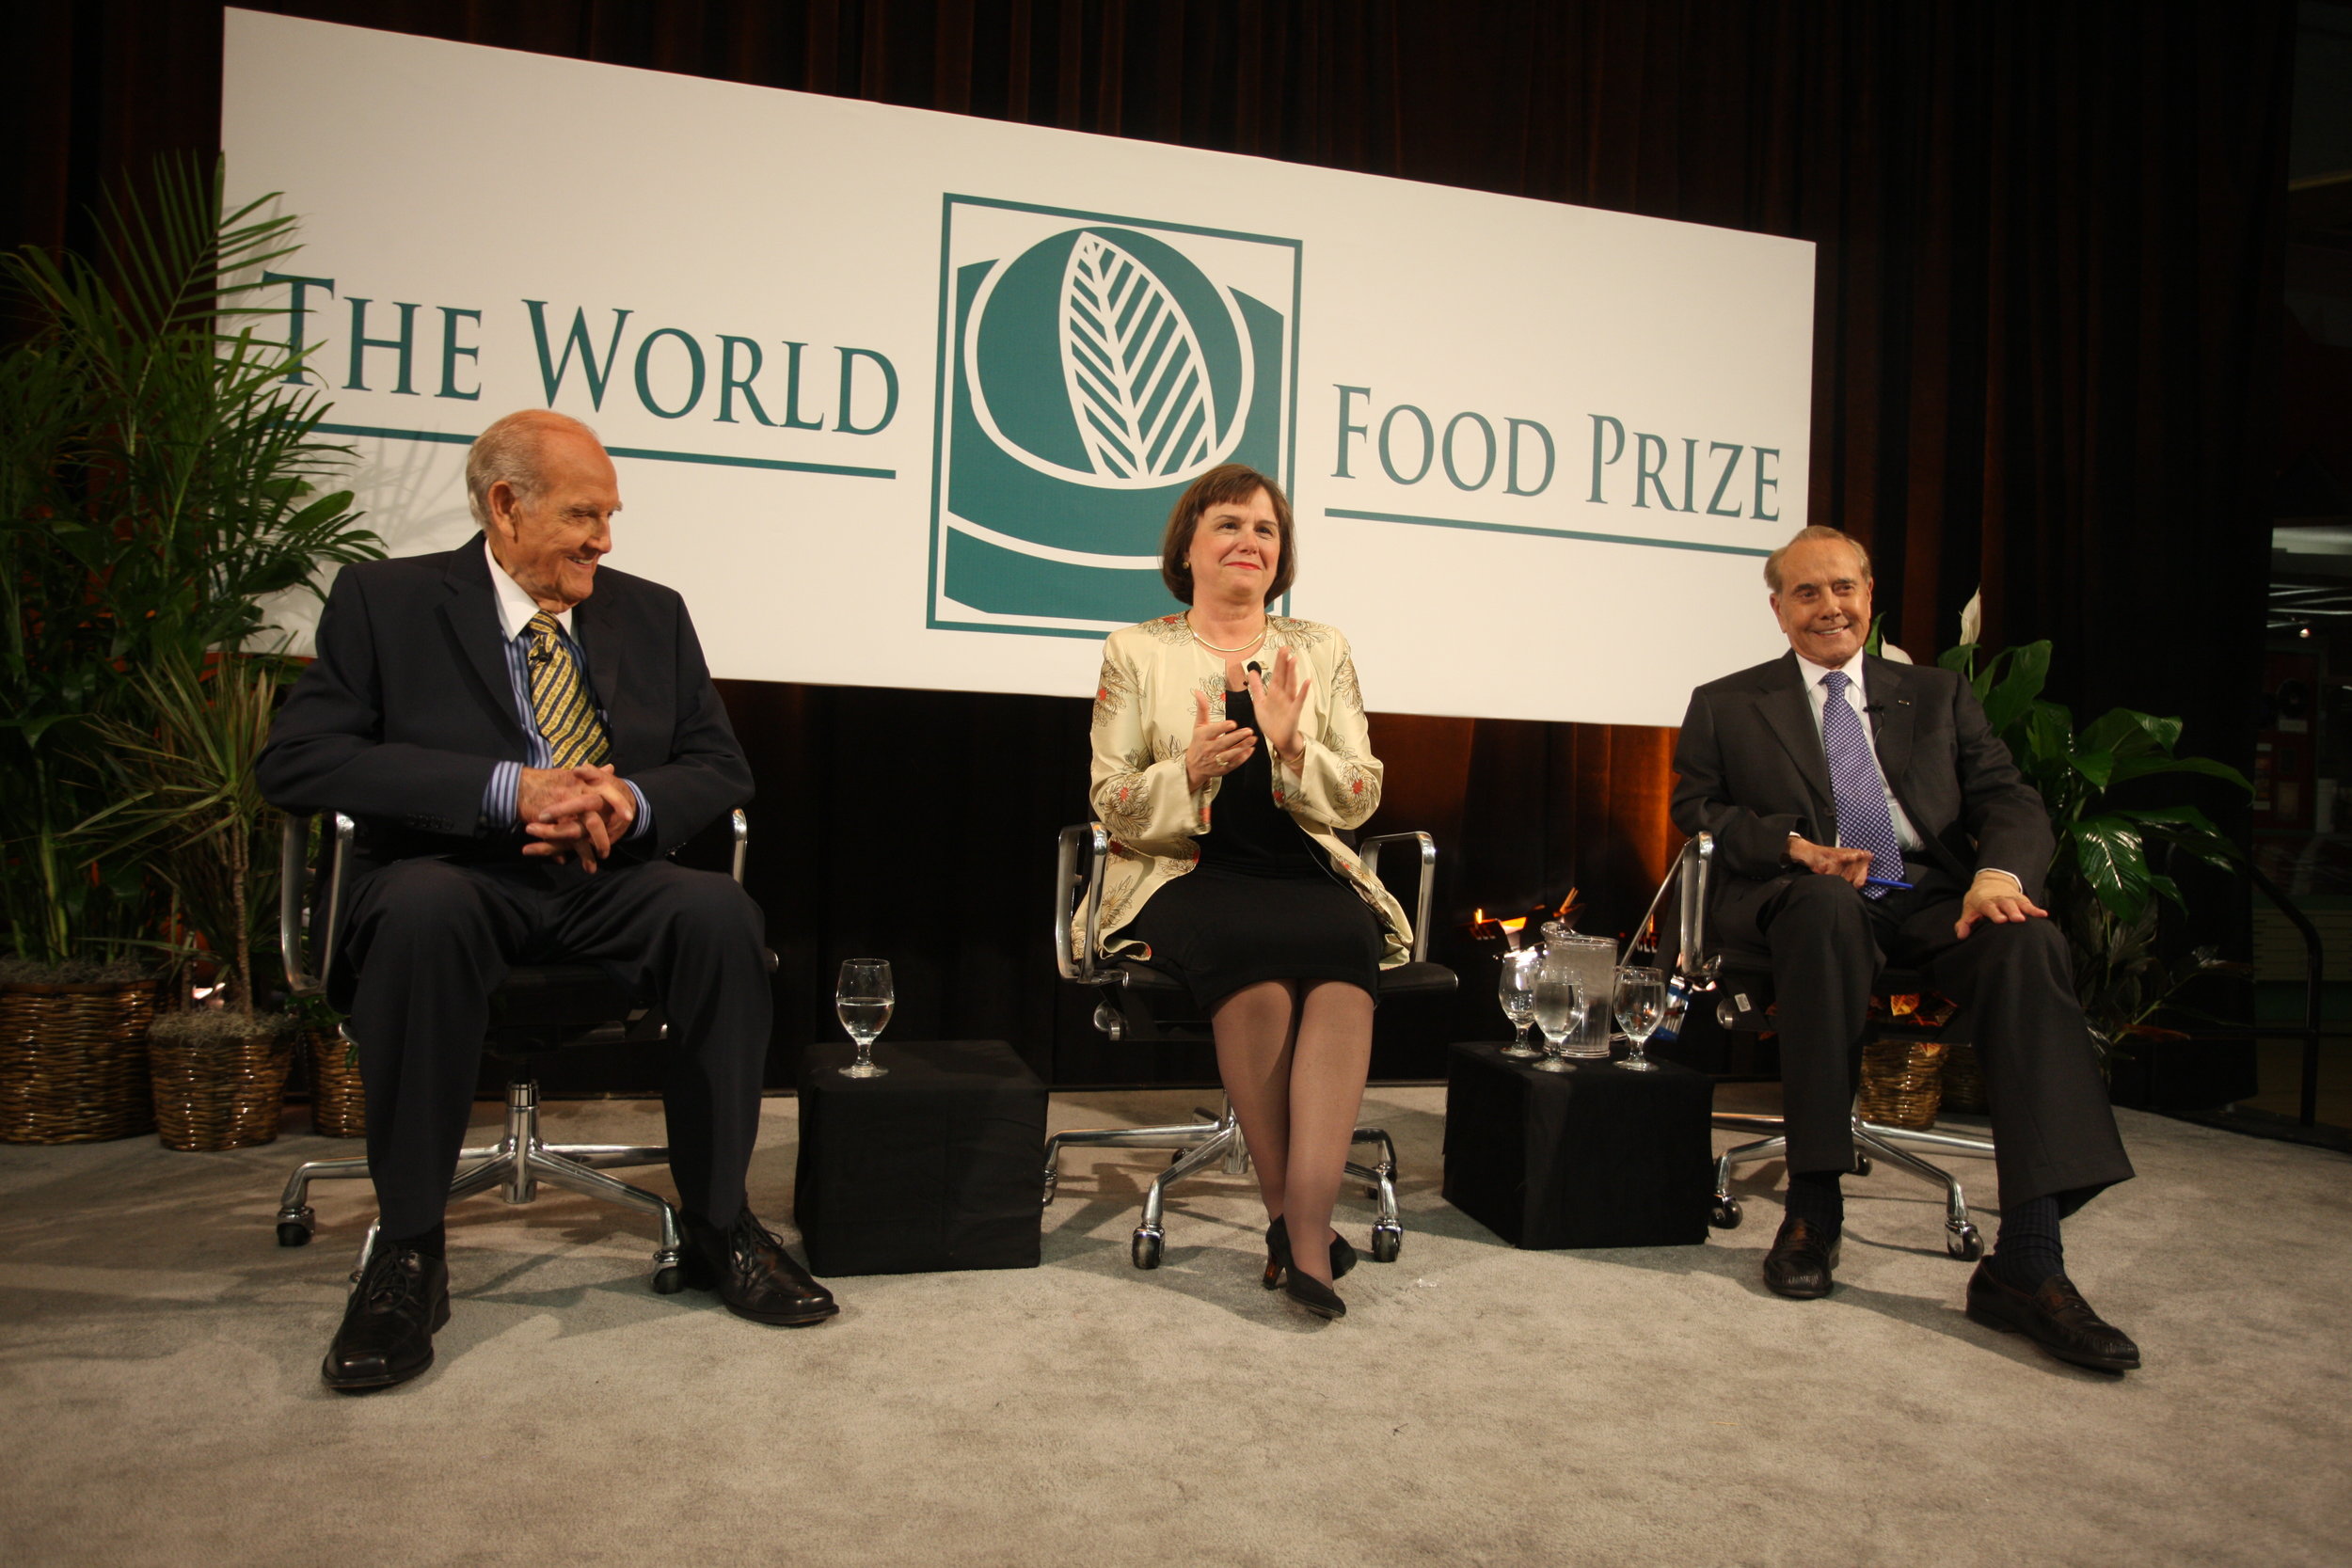  World Food Prize Panel with 2008 Laureates Senators George McGovern and Bob Dole 